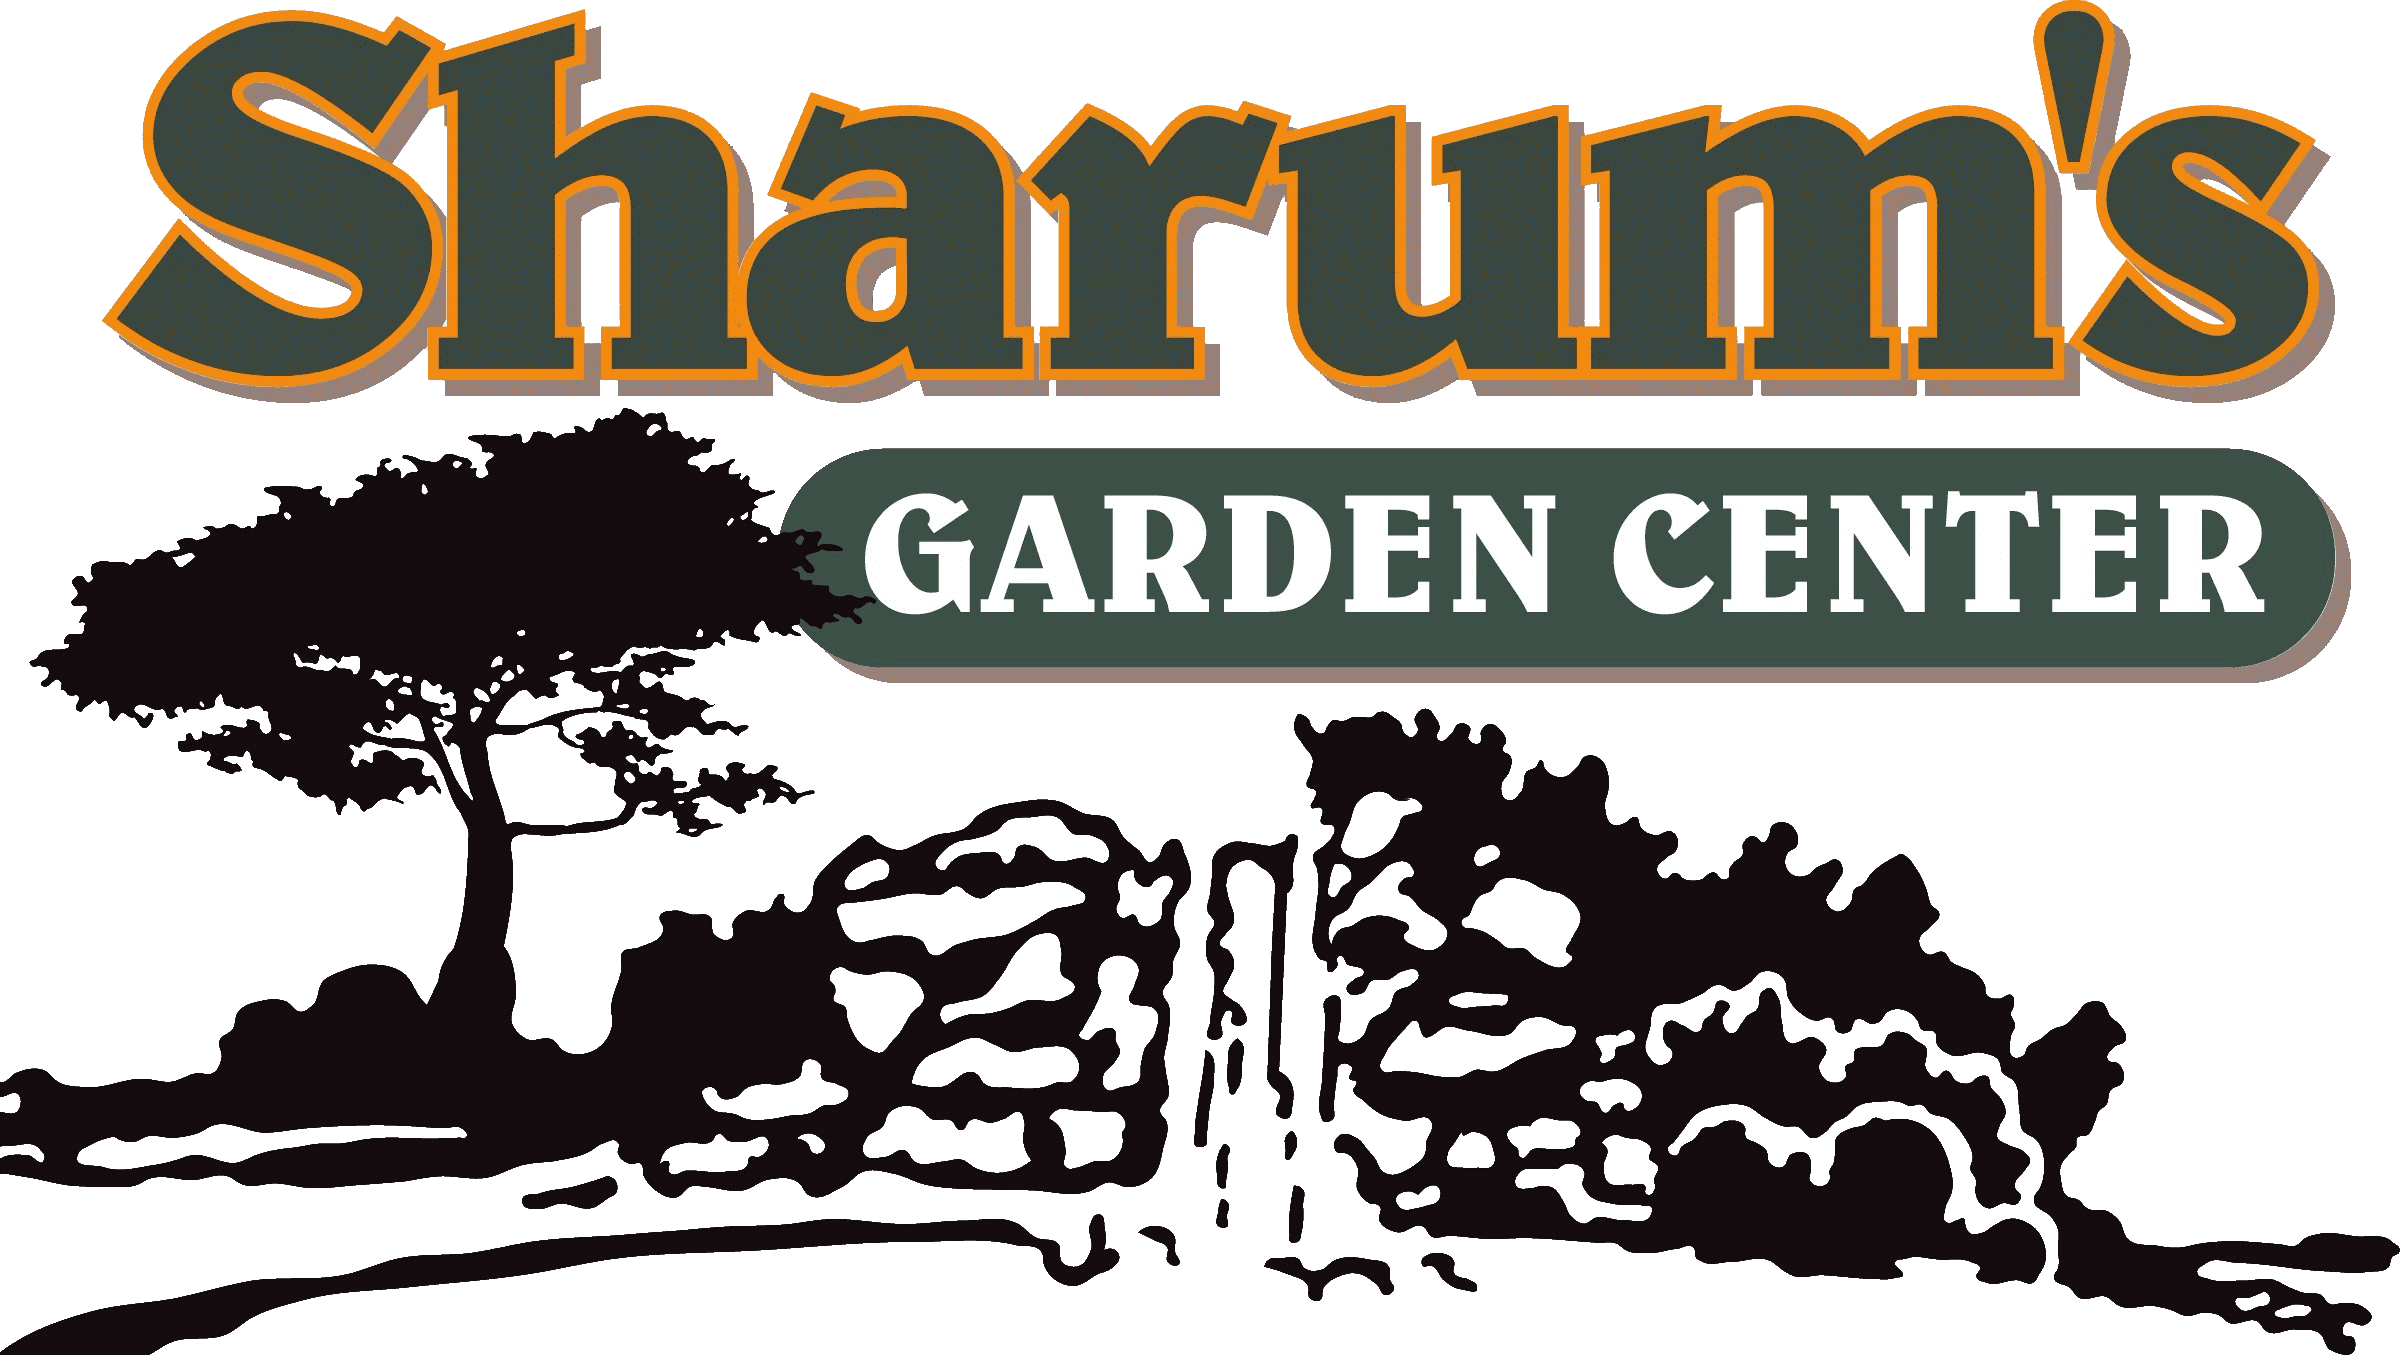 Sharum's Garden Center and Landscaping